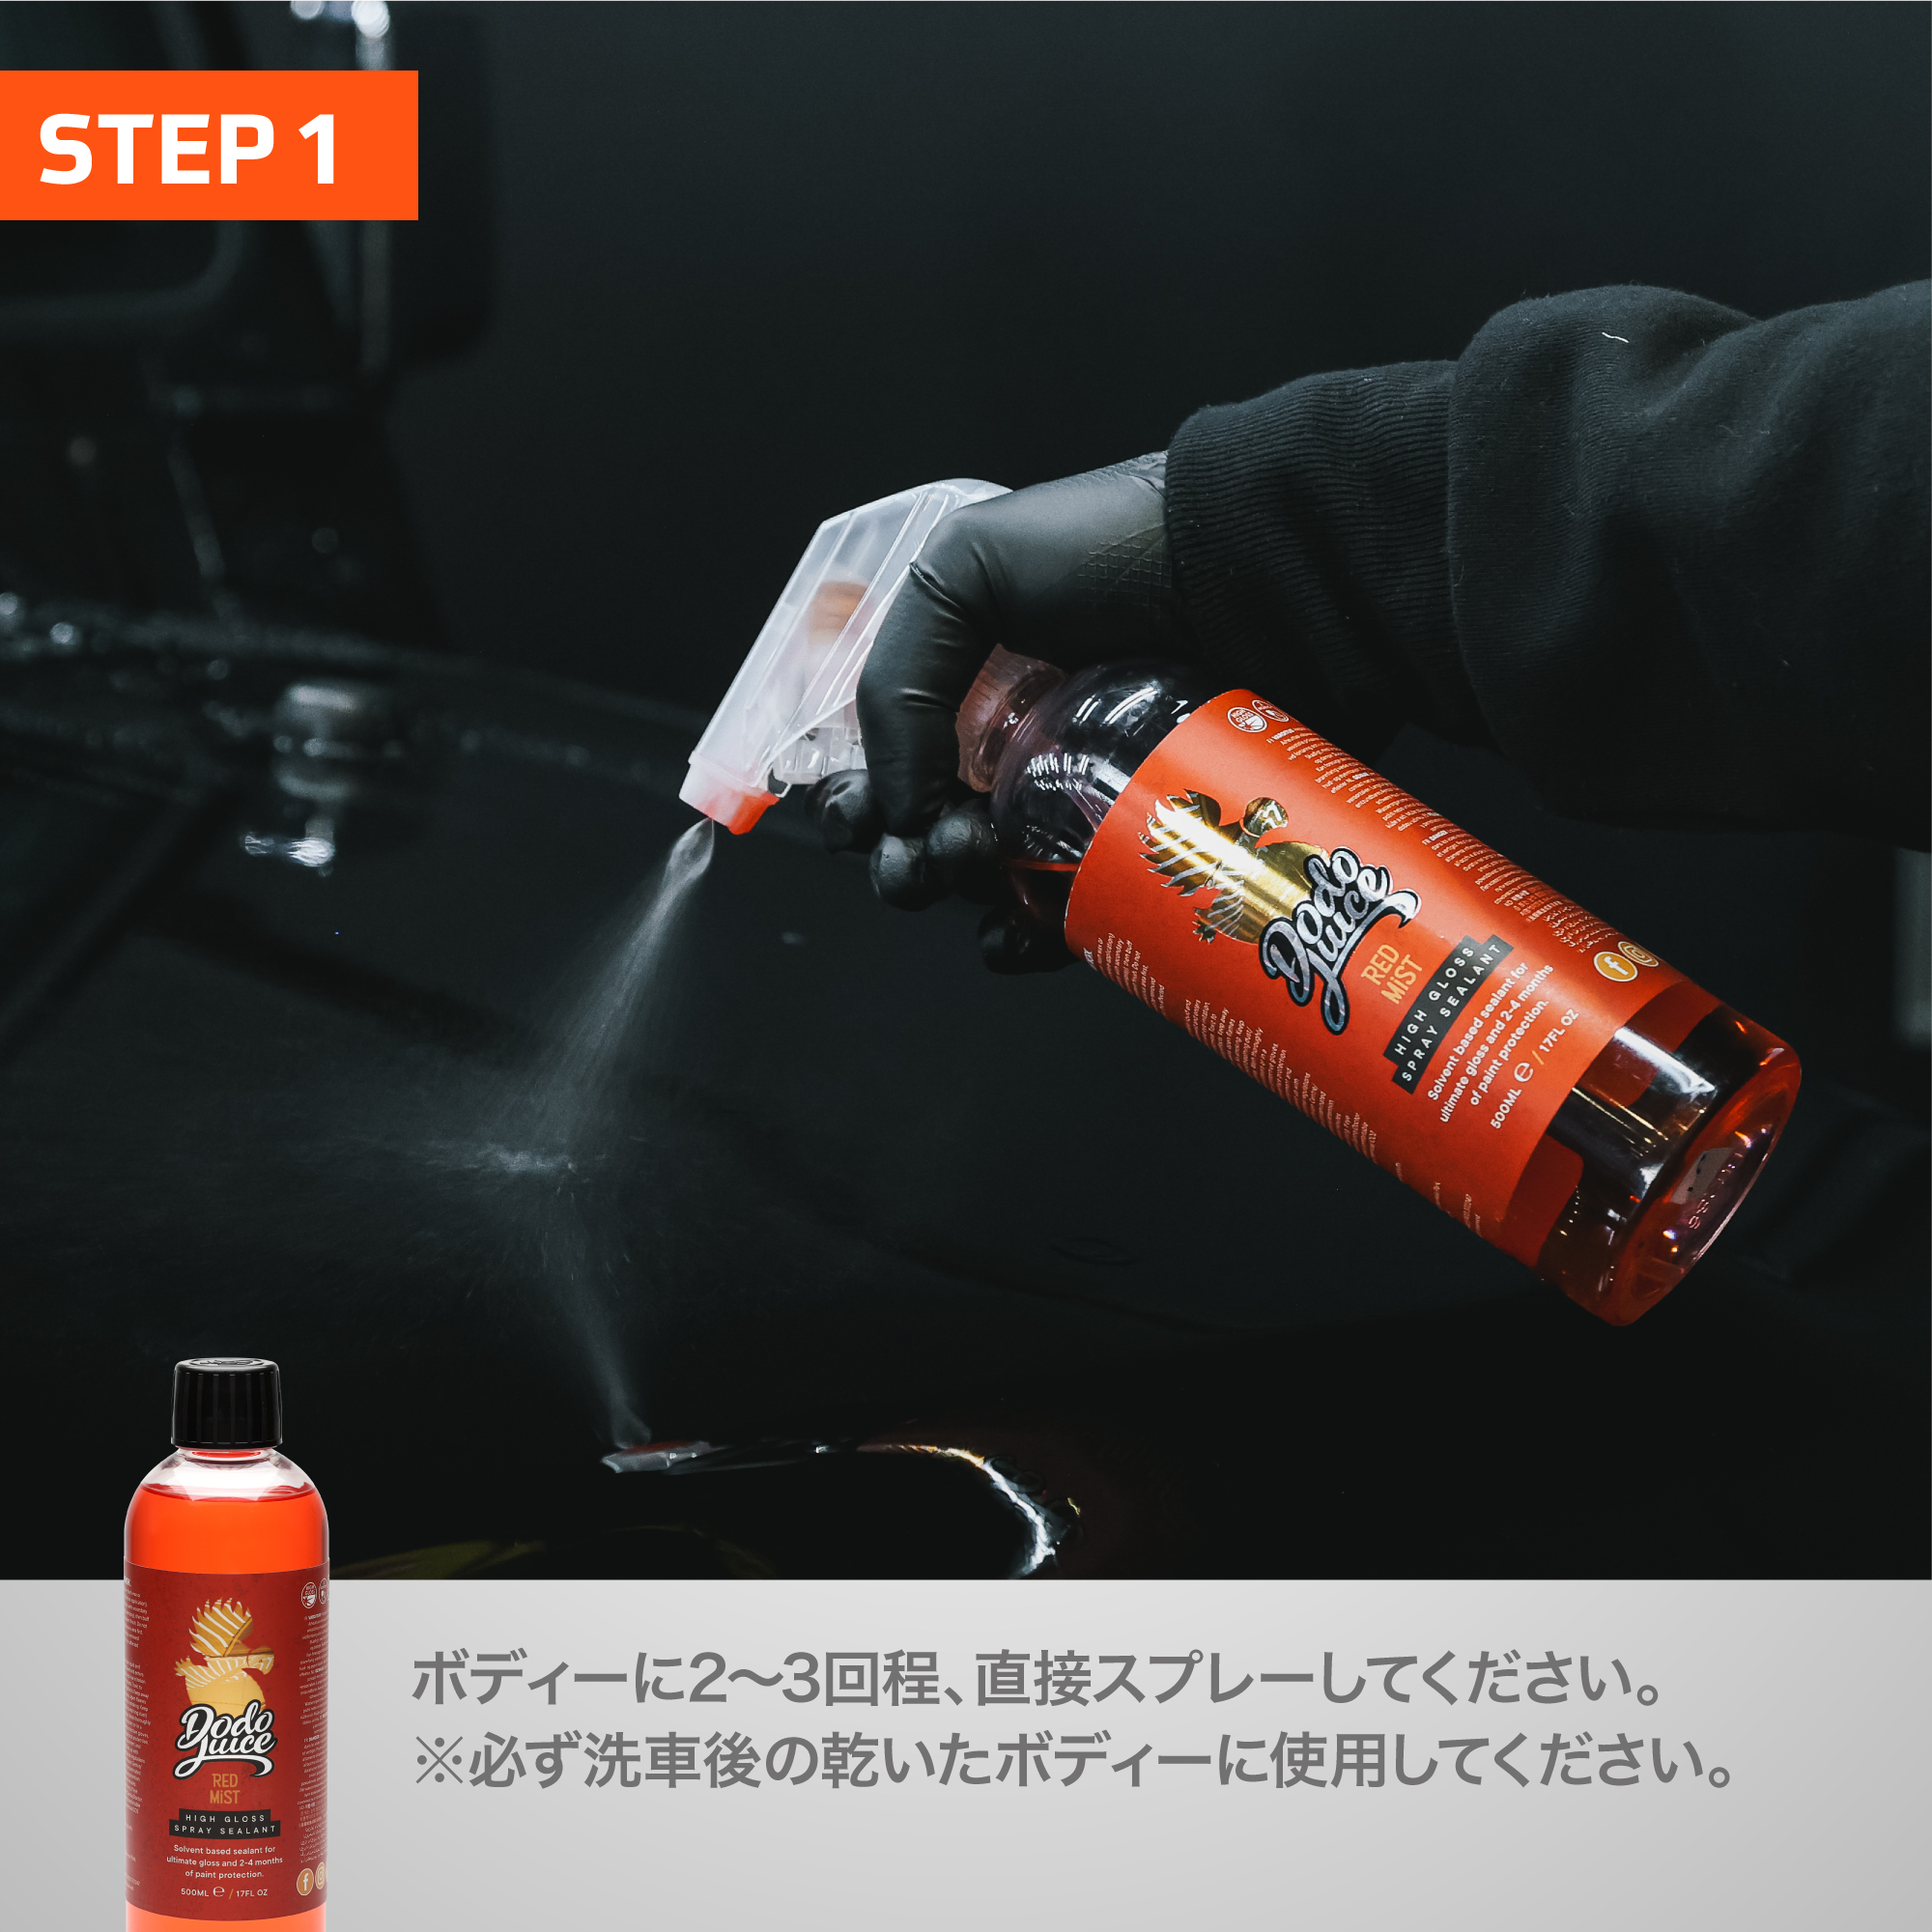 Dodo Juice TOKYO BORN TO BE MiLD ボーントゥビマイルド 500ml 中性カーシャンプー